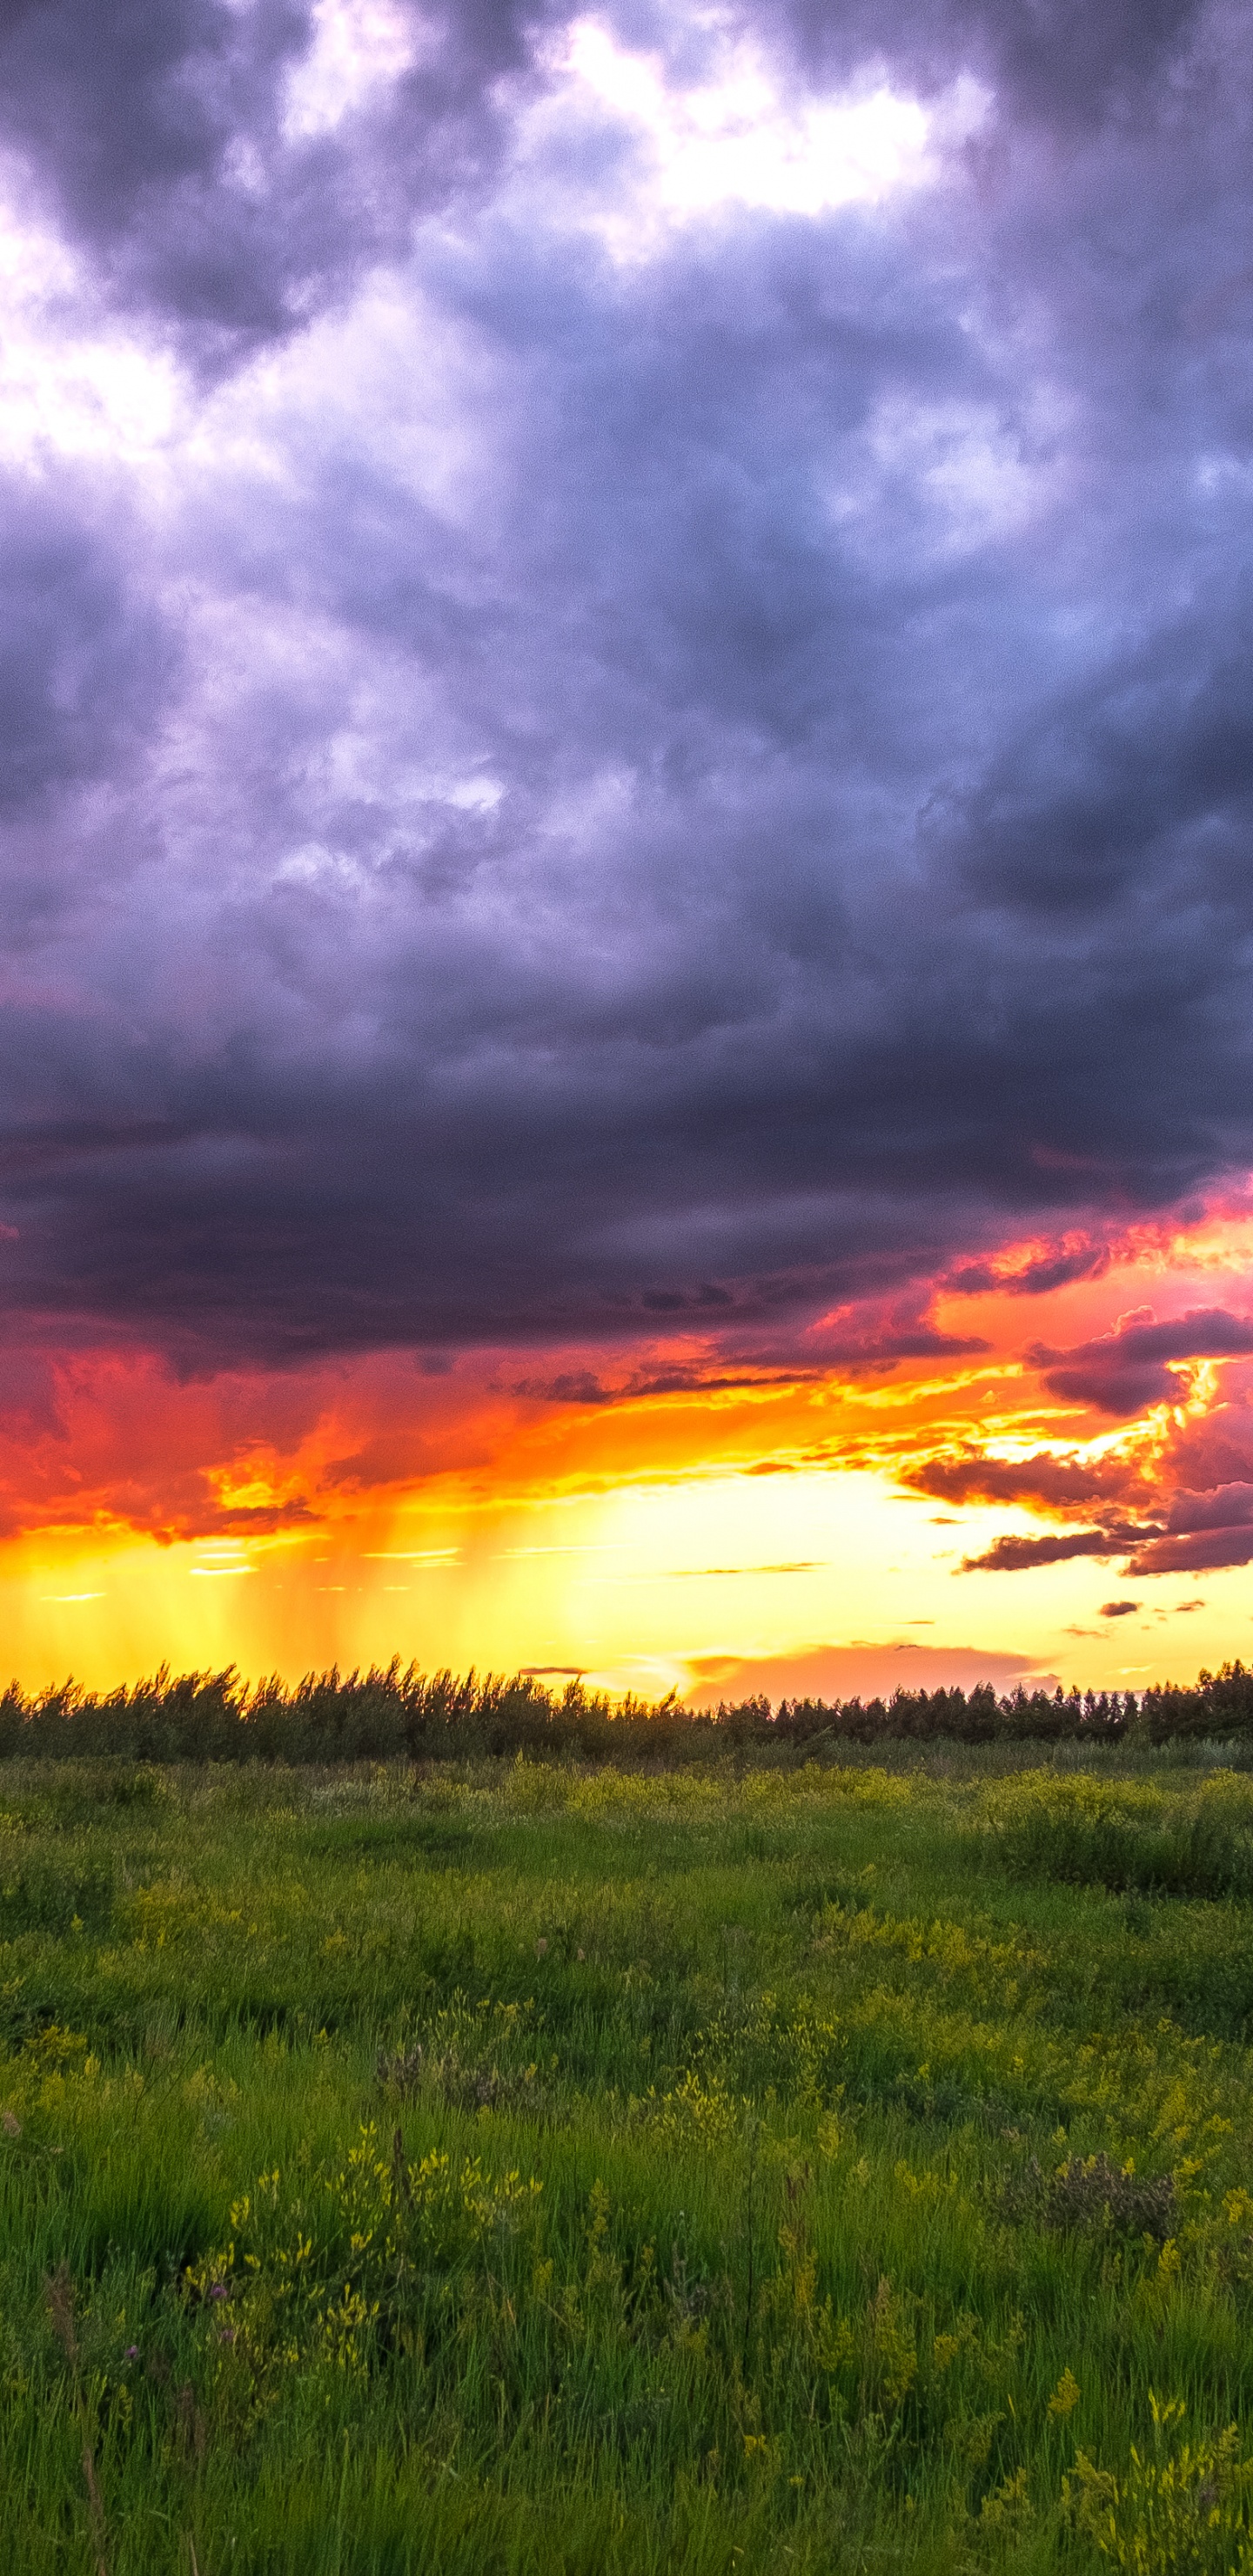 Green Grass Field Under Cloudy Sky During Sunset. Wallpaper in 1440x2960 Resolution